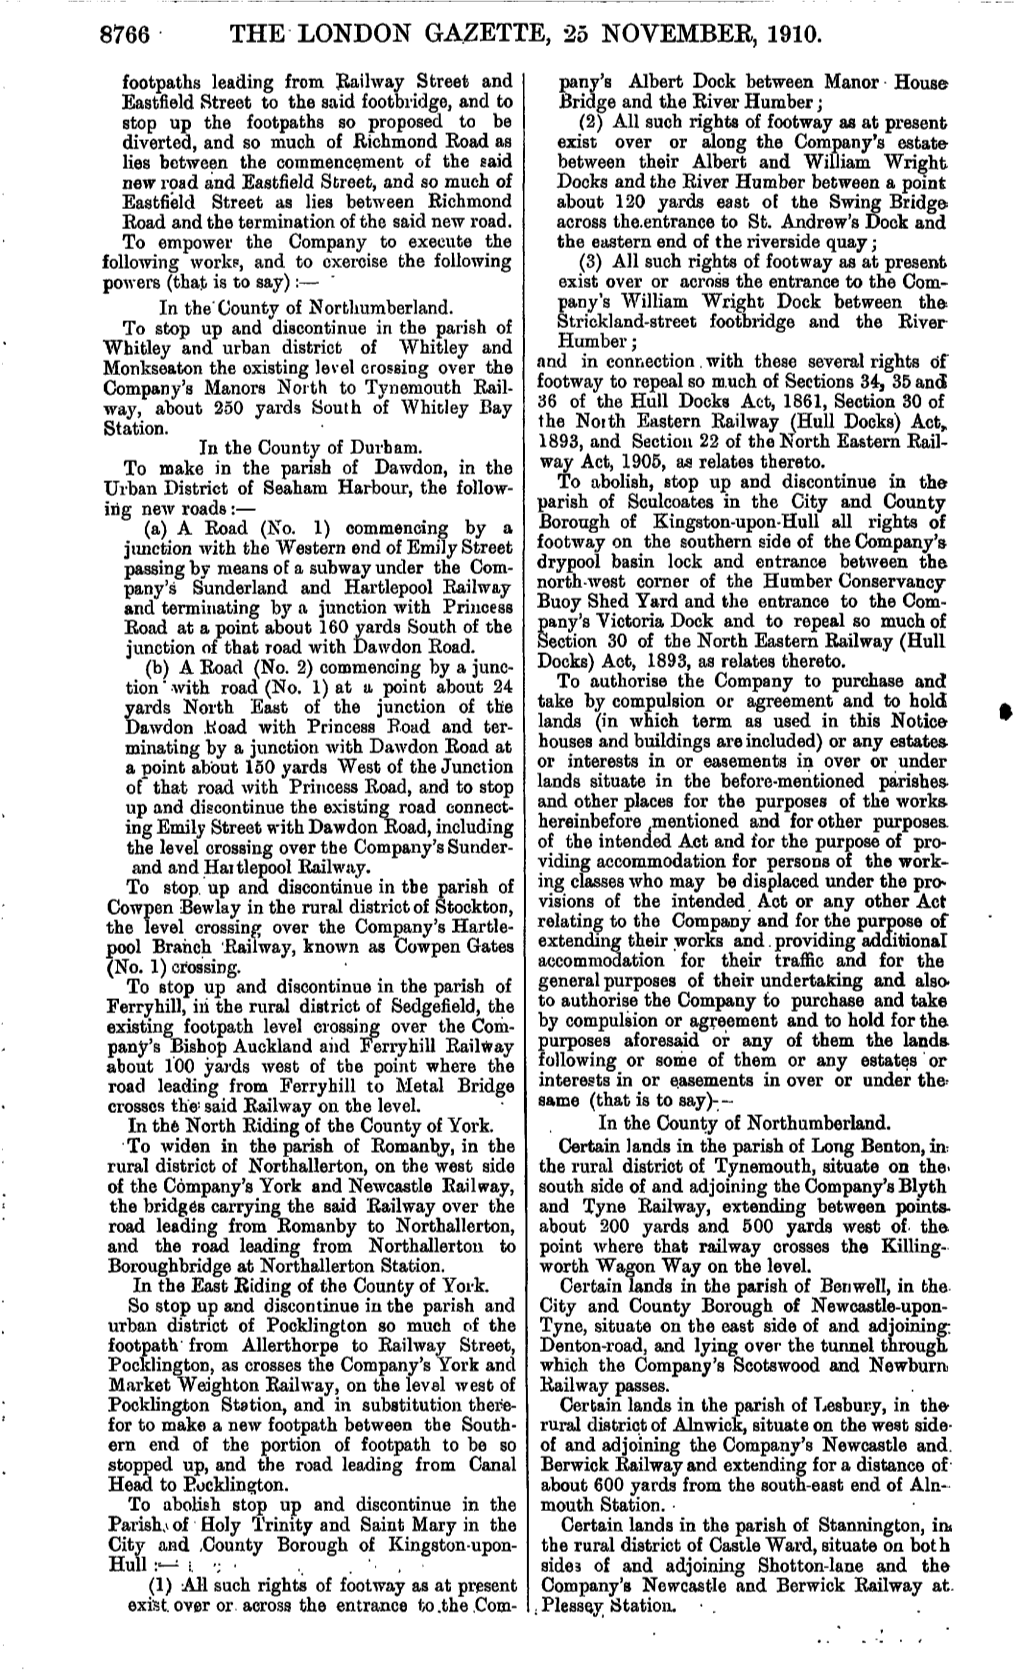 8766 the London Gazette, 25 November, 1910